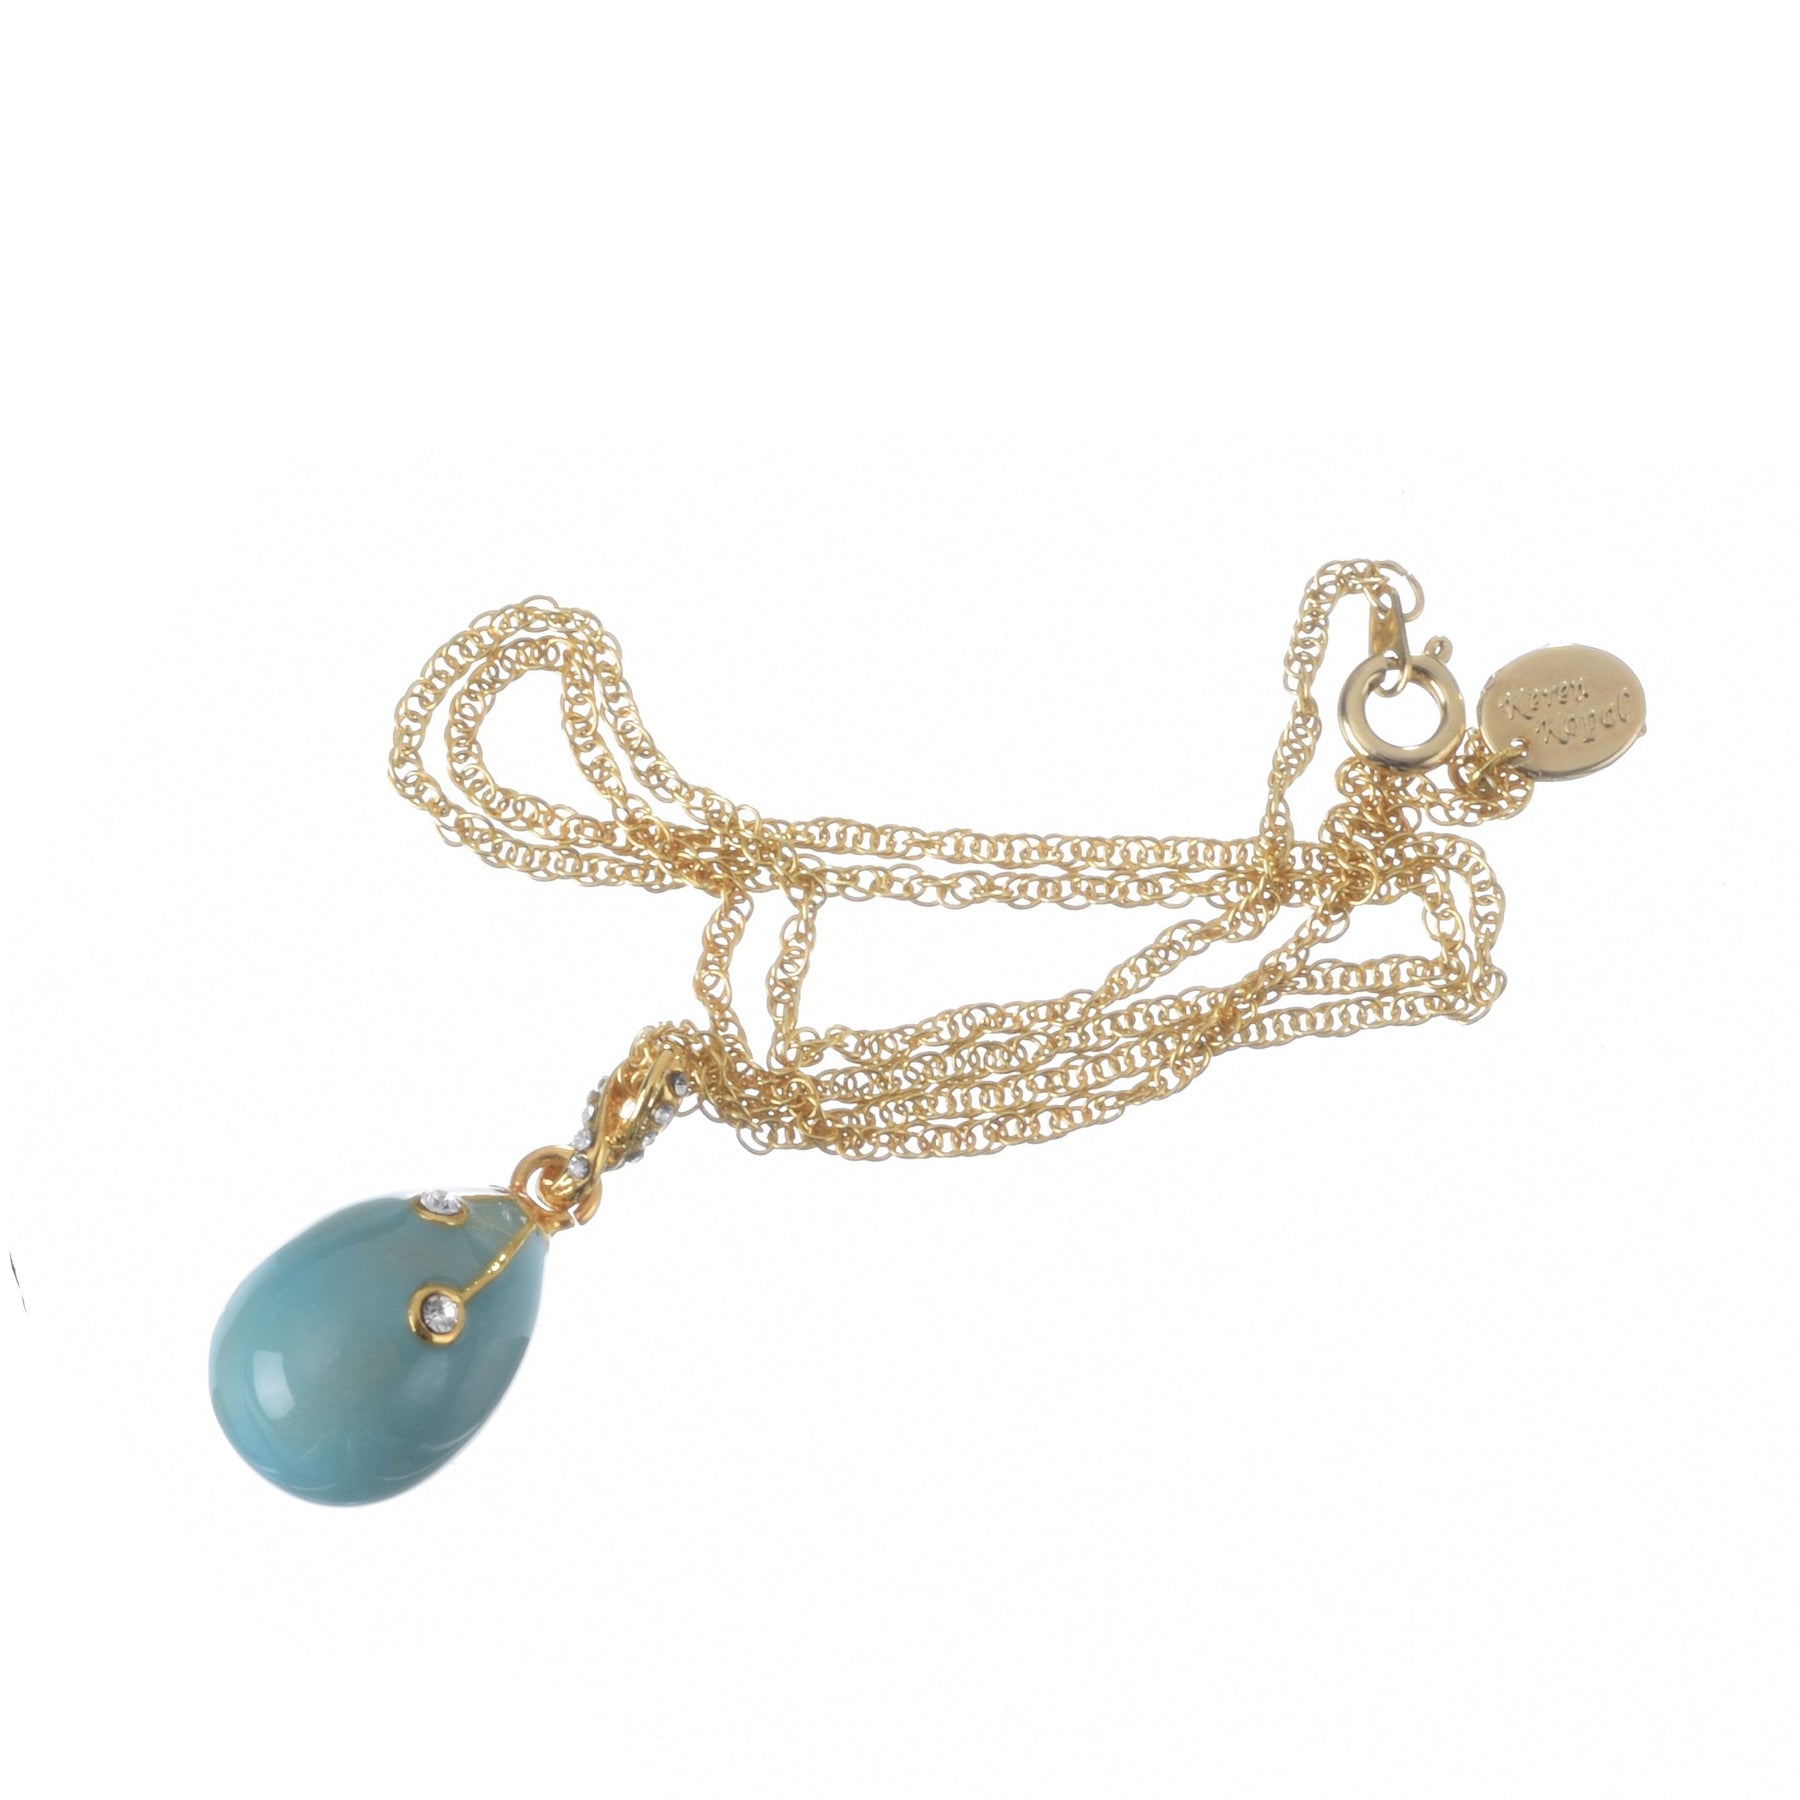 Turquoise Egg Pendant Necklace jewelry Keren Kopal